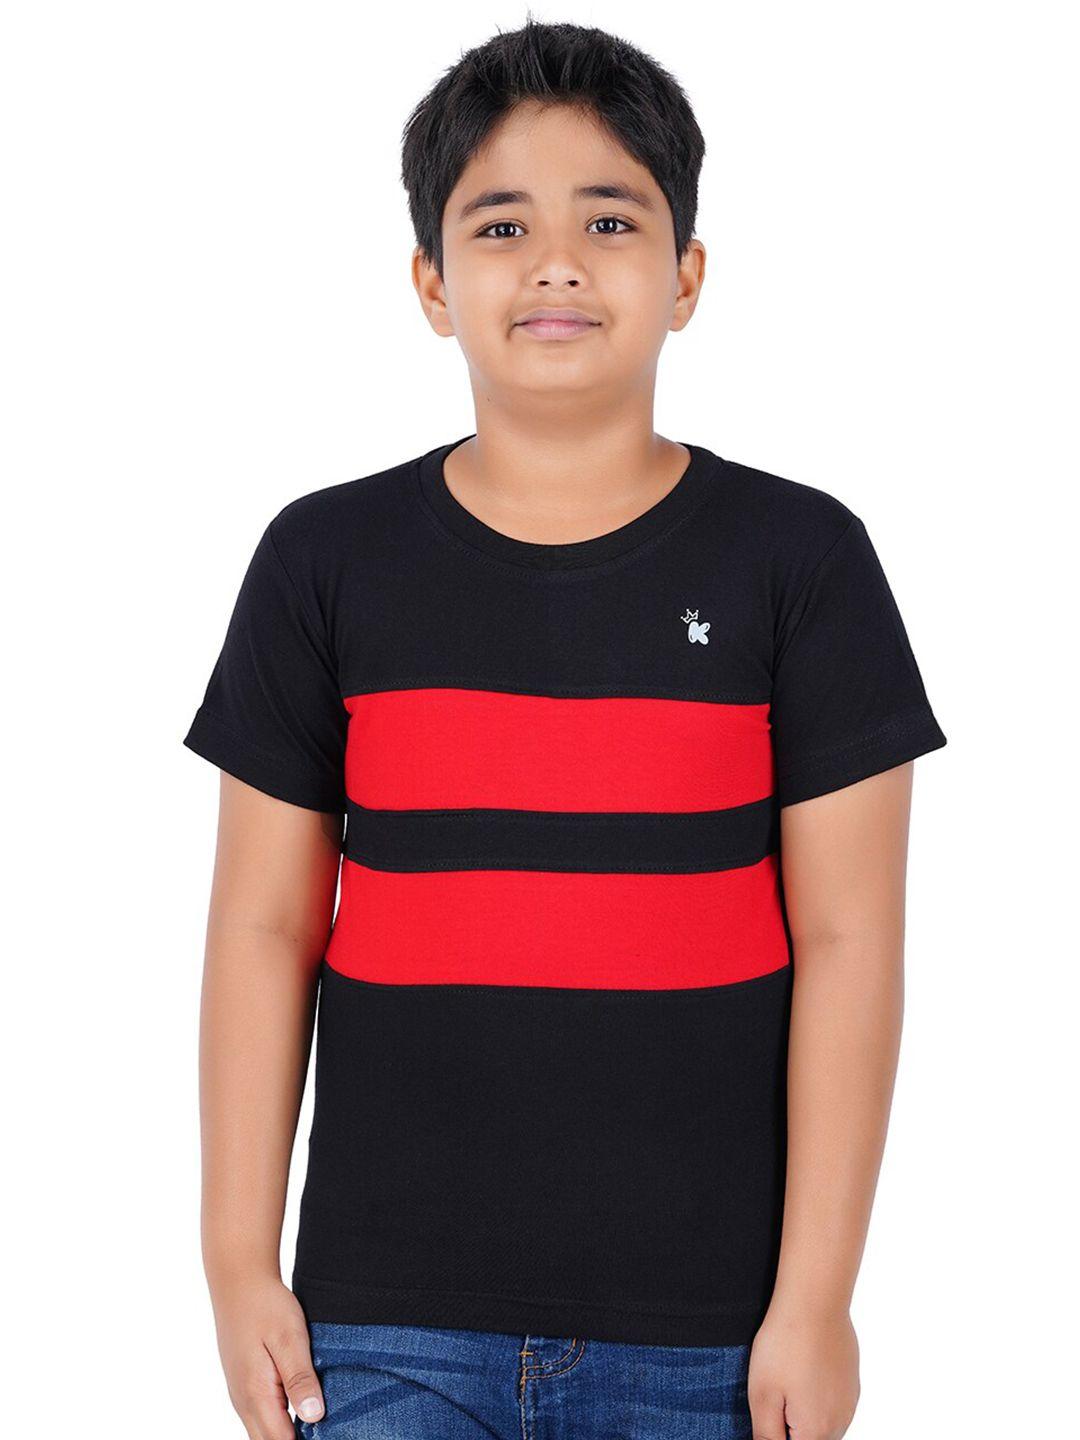 kiddeo boys black& red colourblocked slim fit t-shirt